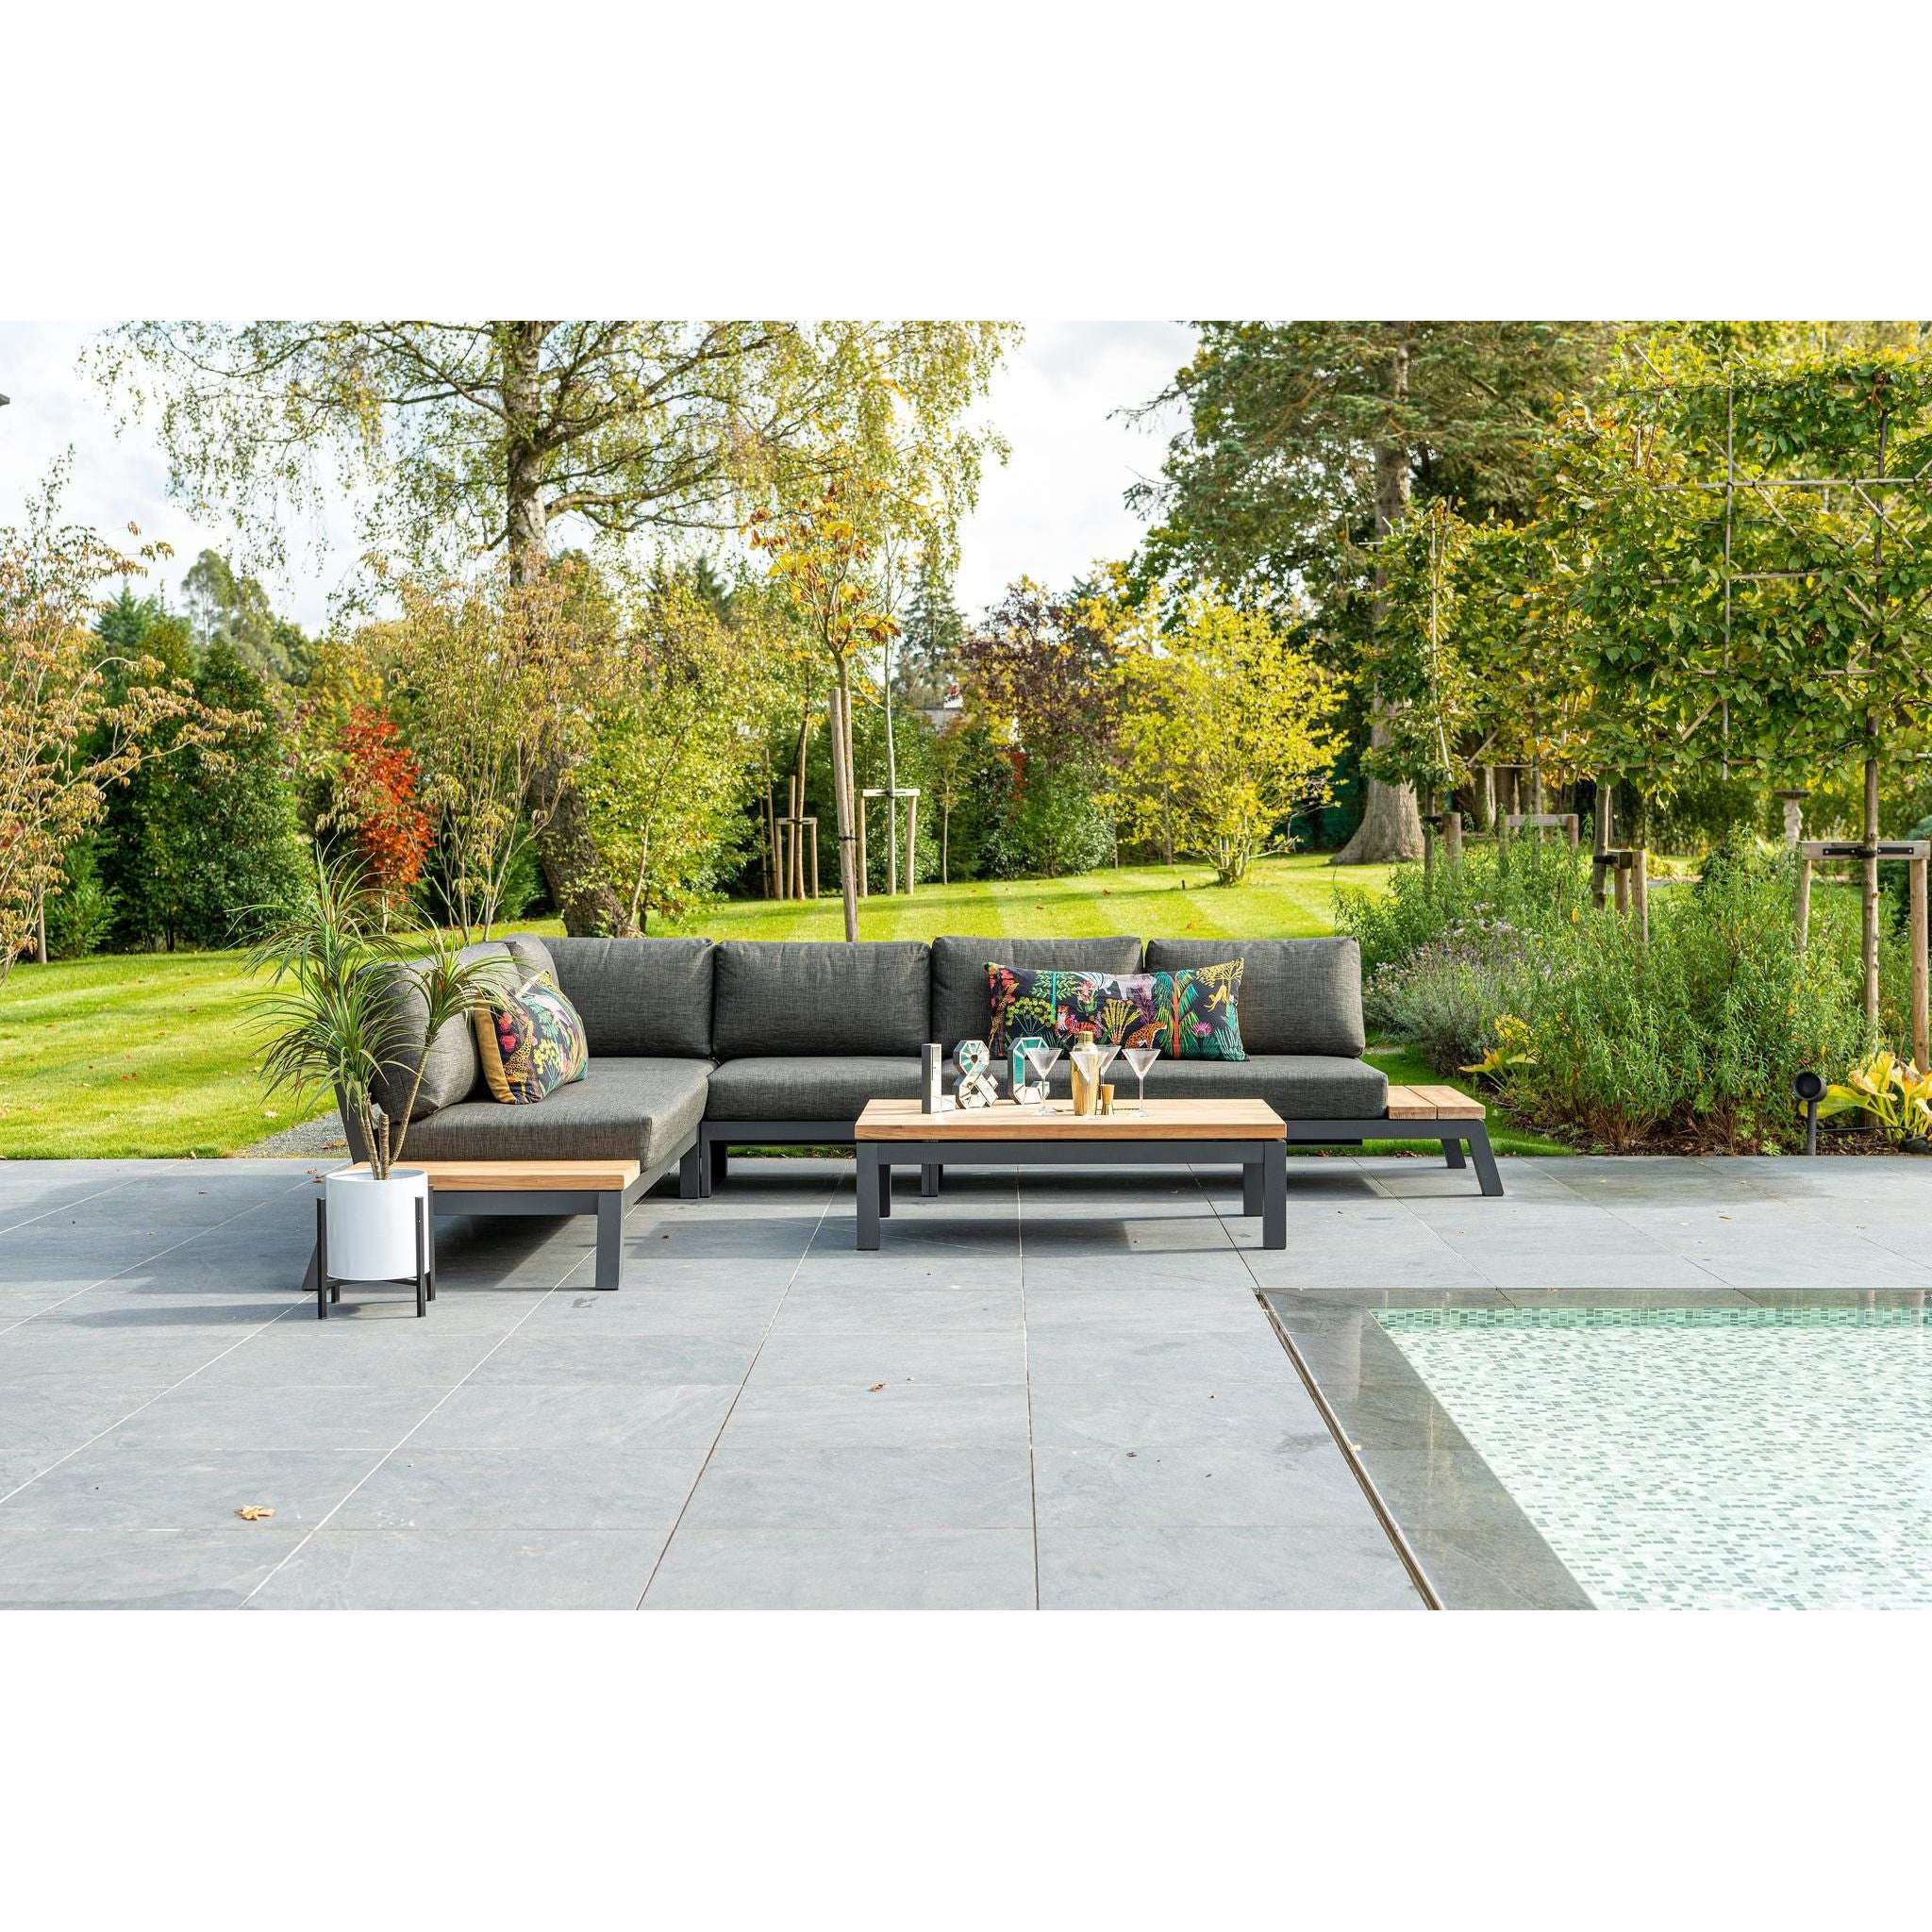 Exceptional Garden:4 Seasons Outdoor Empire Corner Sofa Set and 90cm Capitol Teak Coffee table